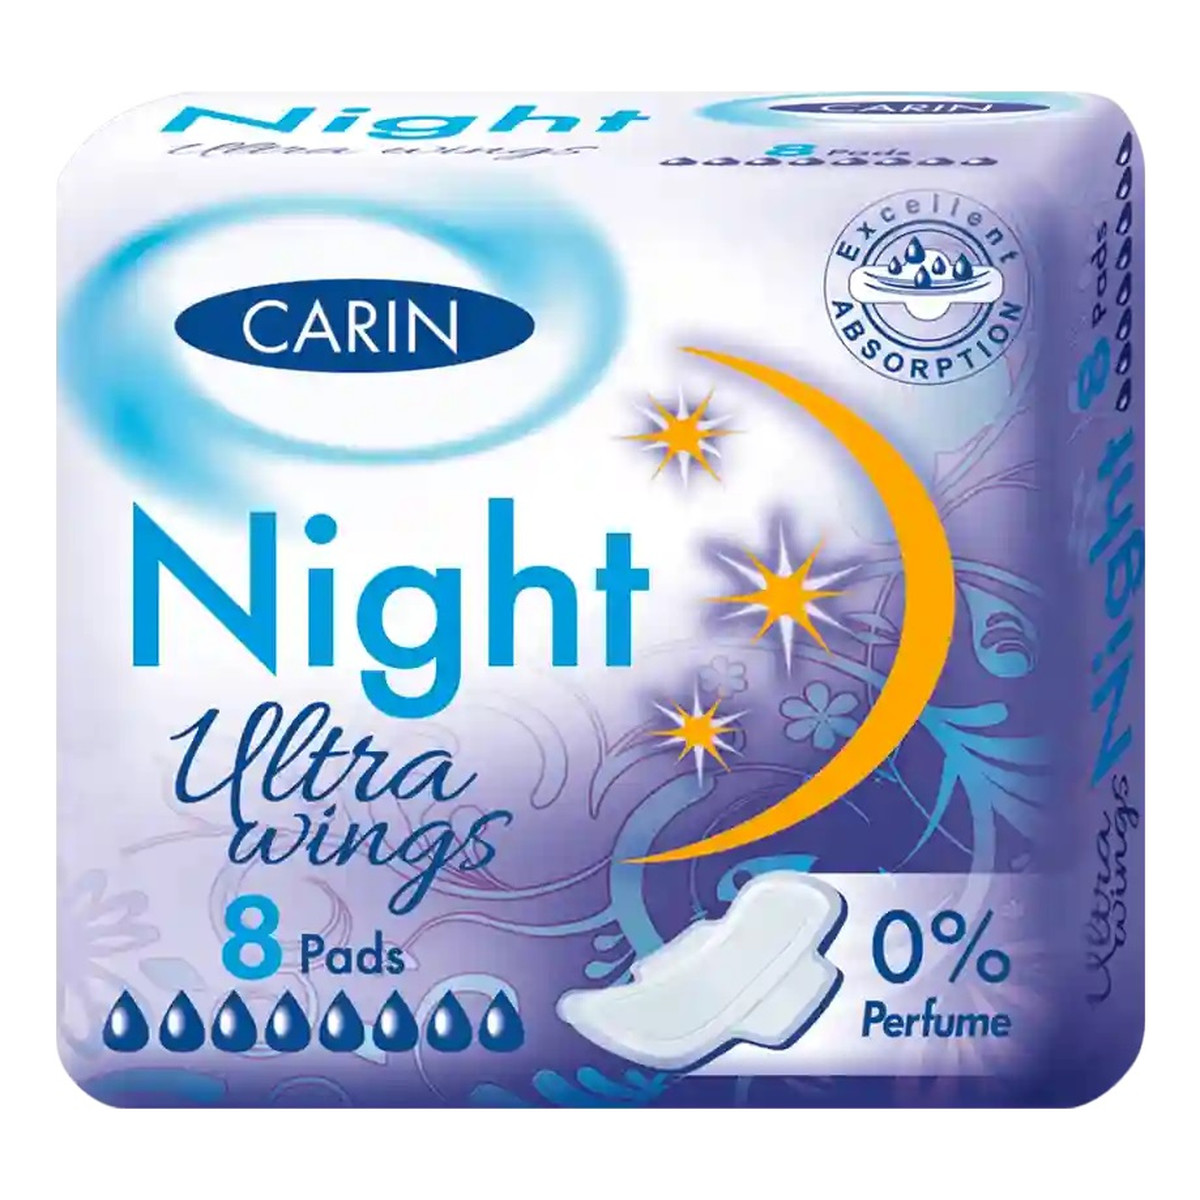 Carin Ultra wings night podpaski higieniczne na noc 8szt